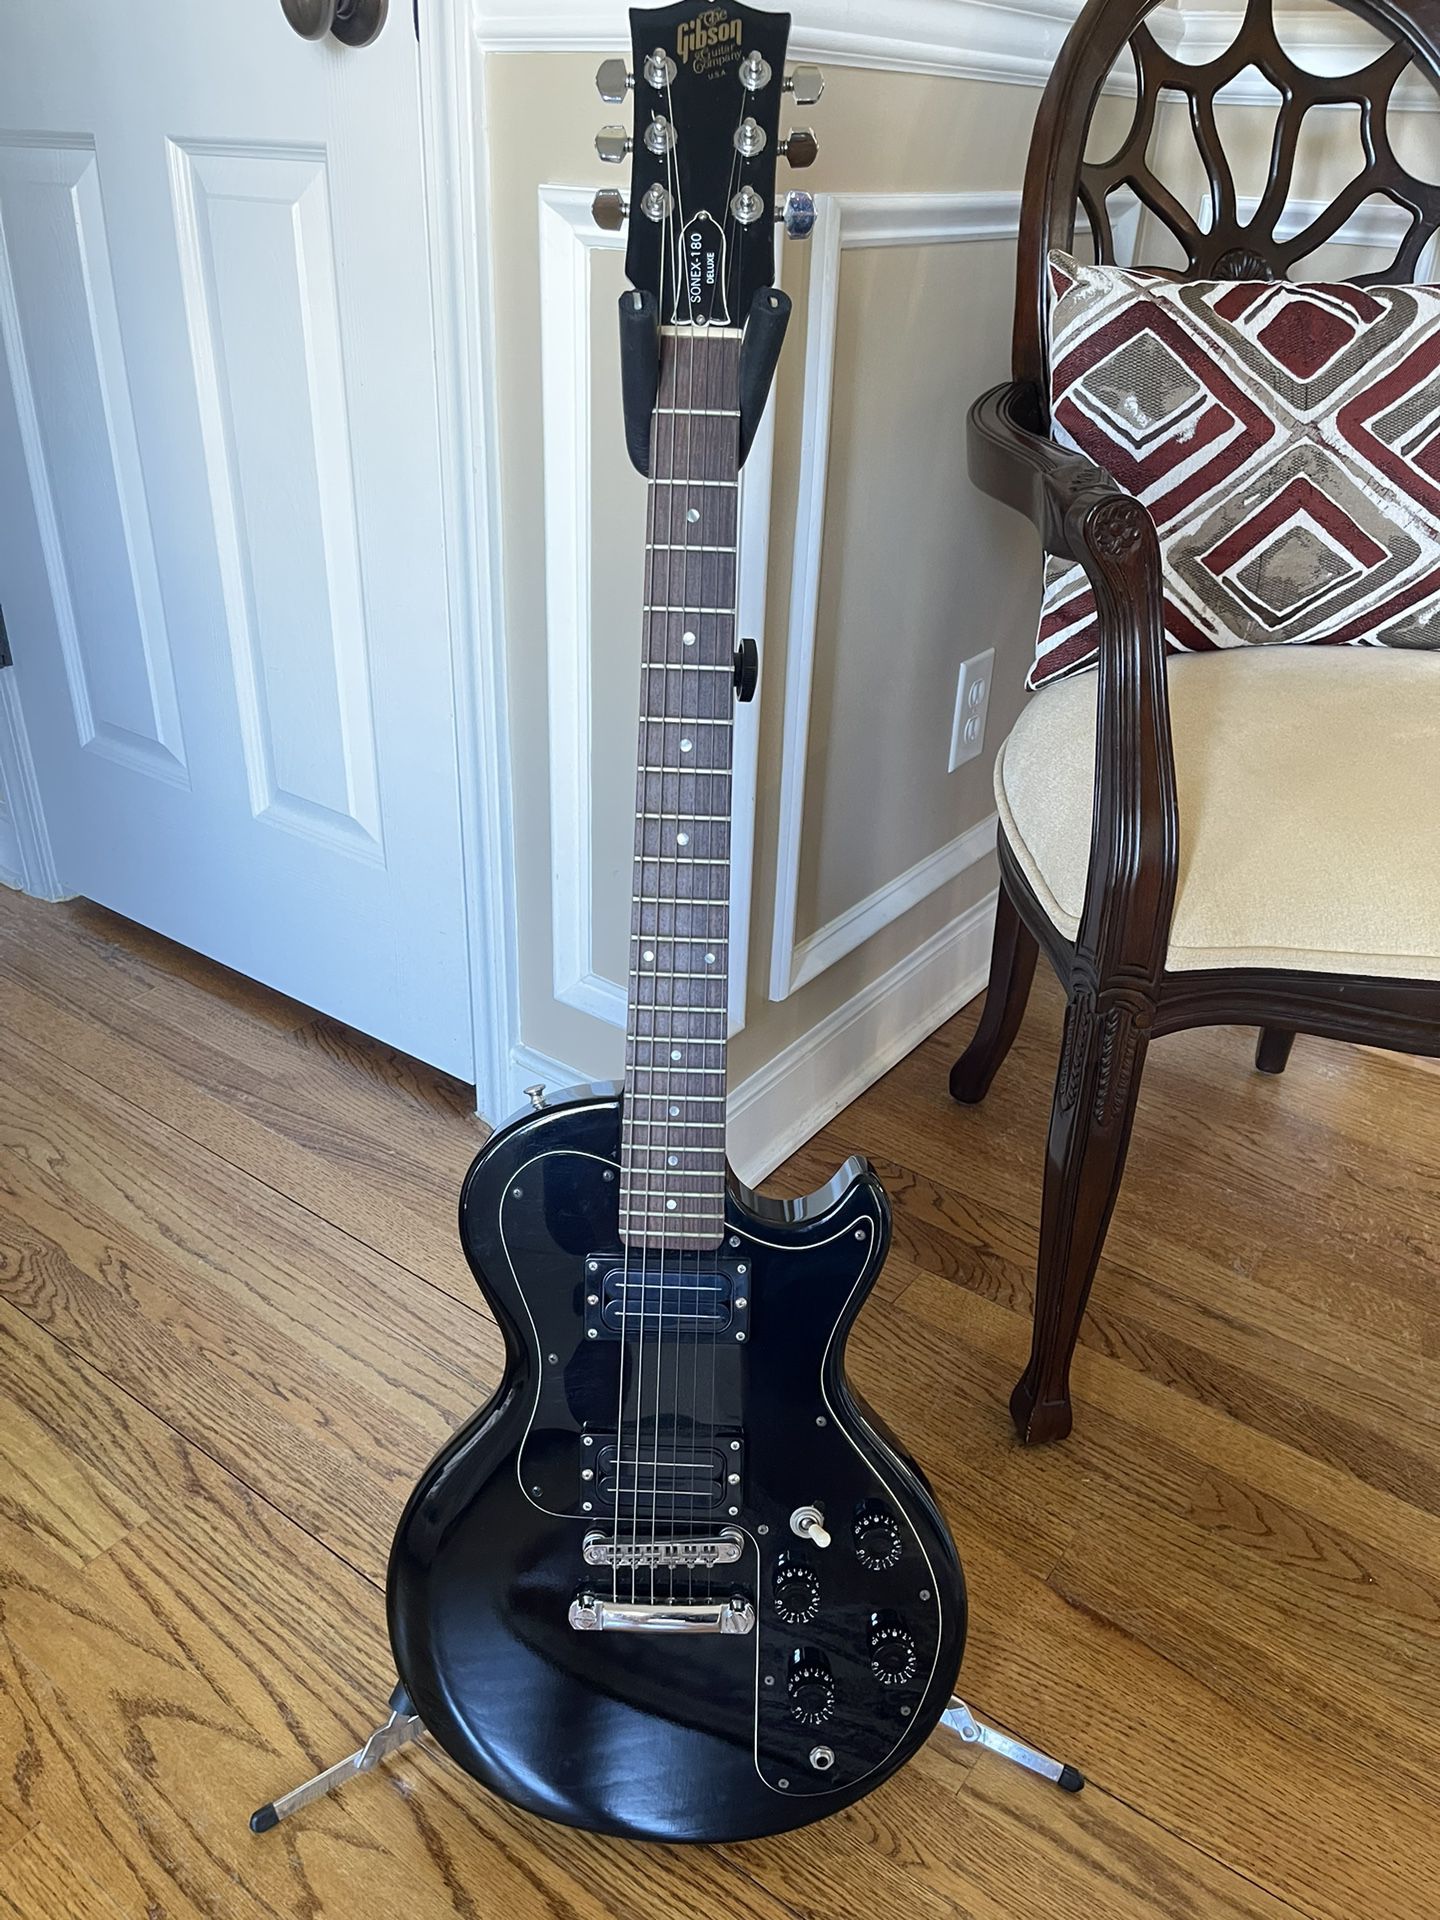 1982 Gibson Sonex 180 Deluxe Les Paul Guitar